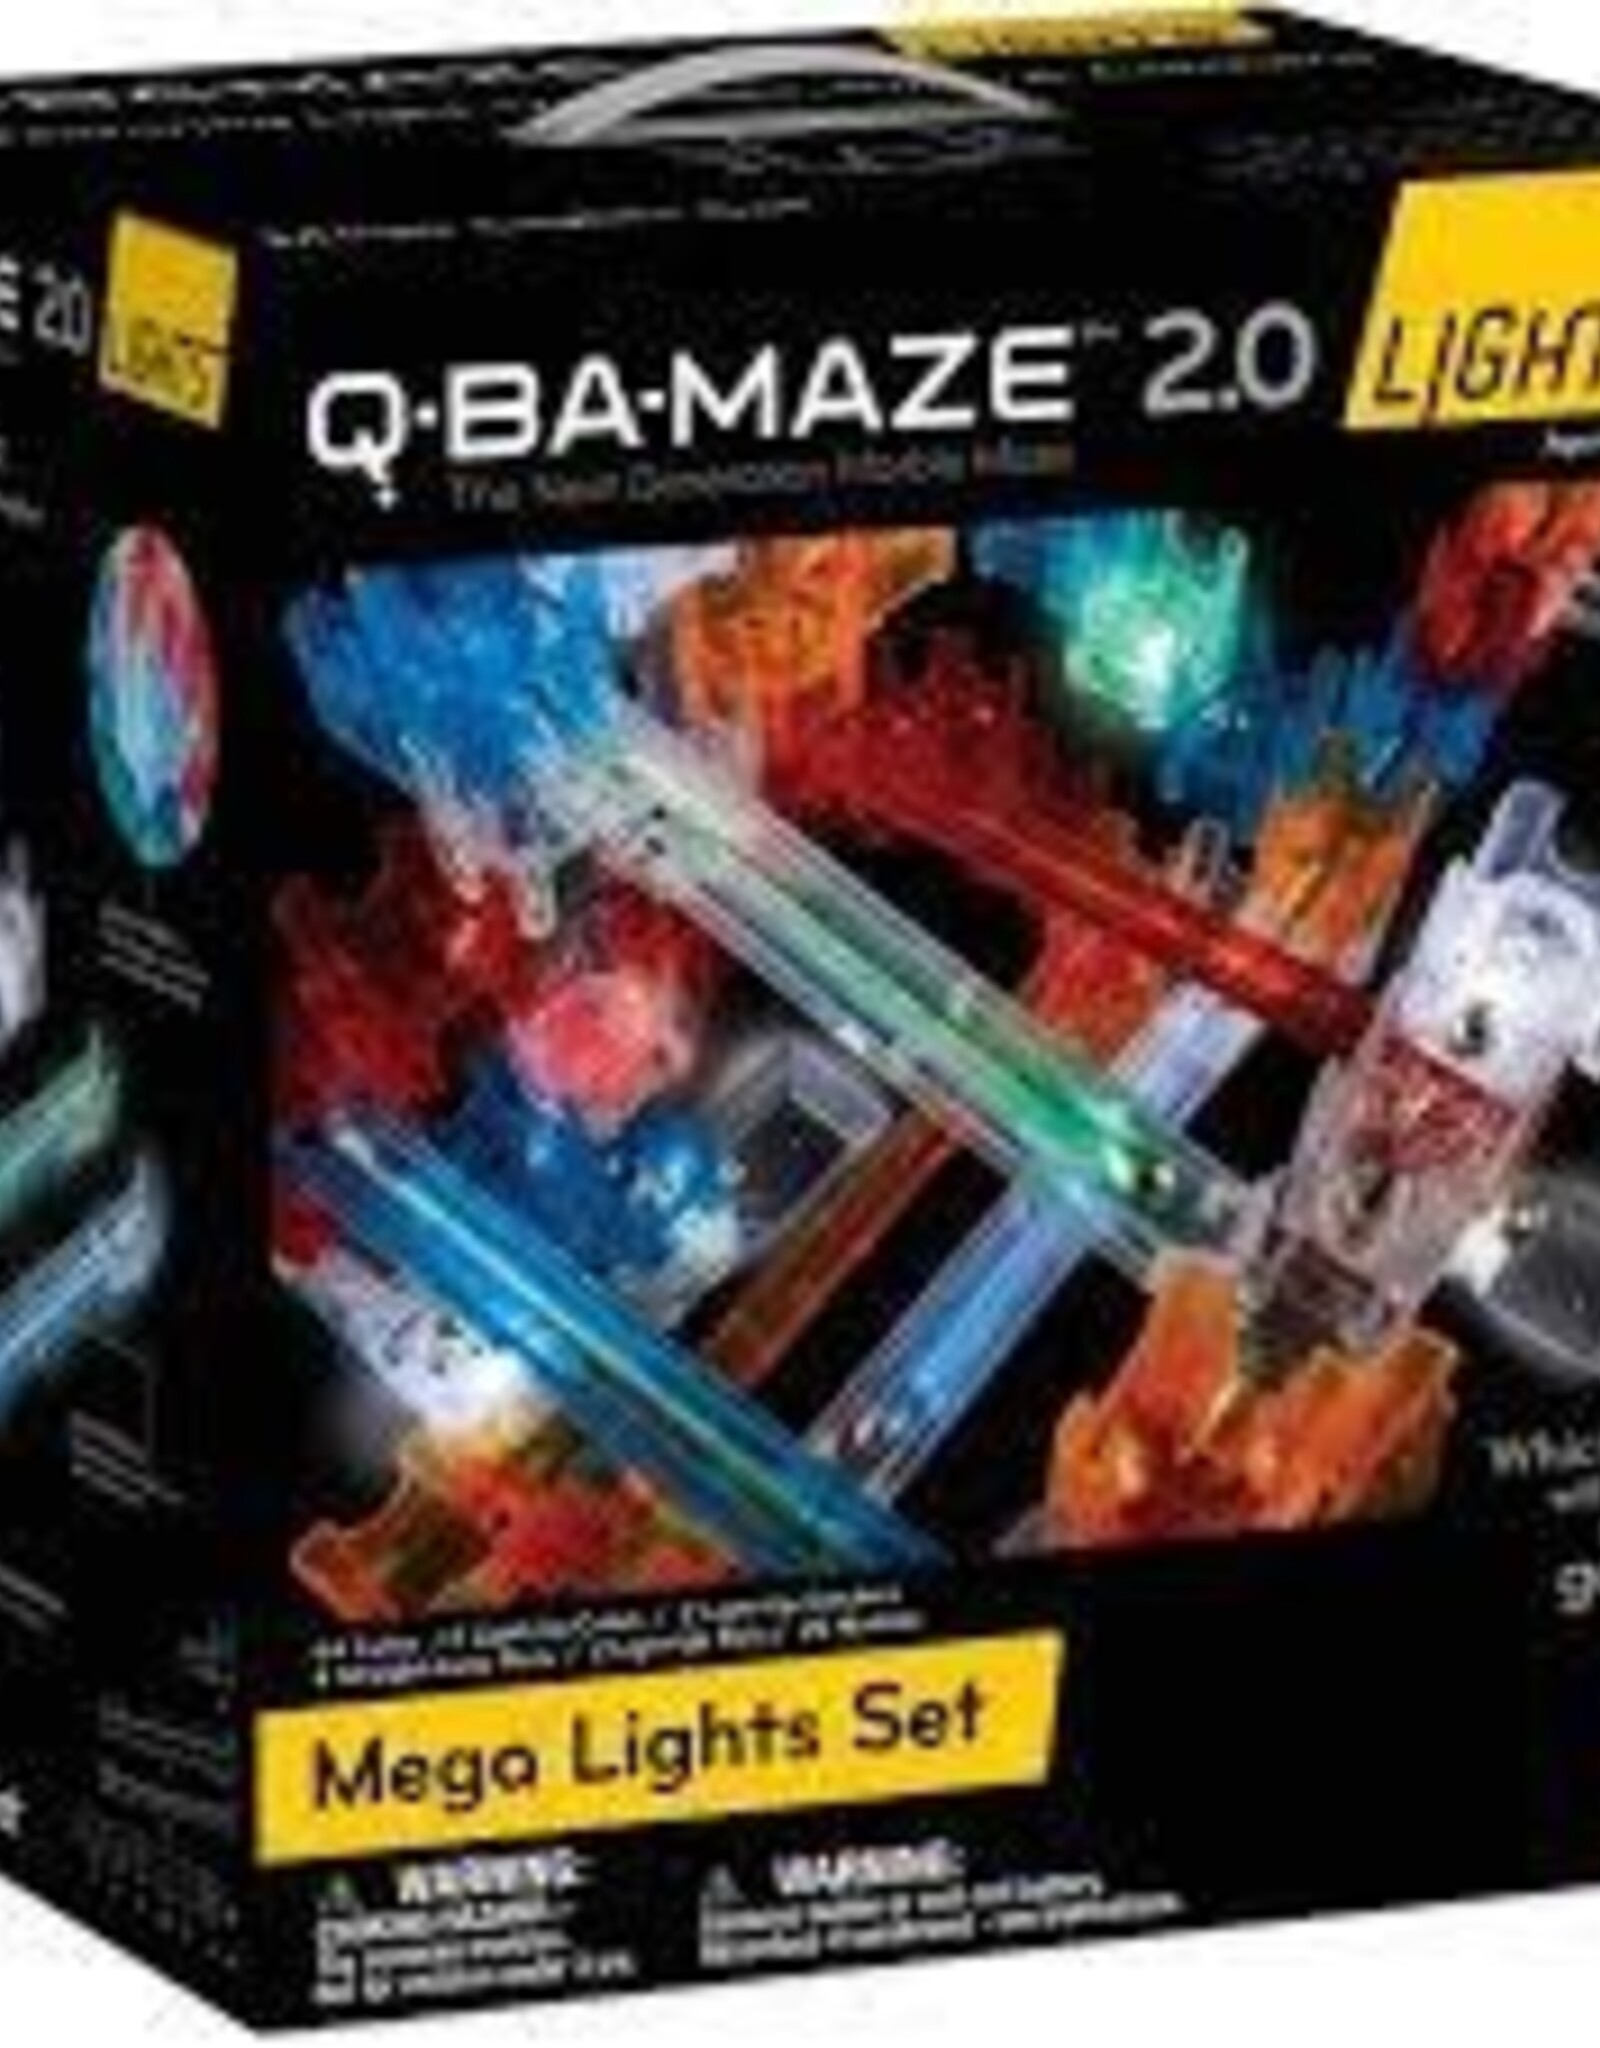 Mindware Q-BA-MAZE: LIGHTS DELUXE SET